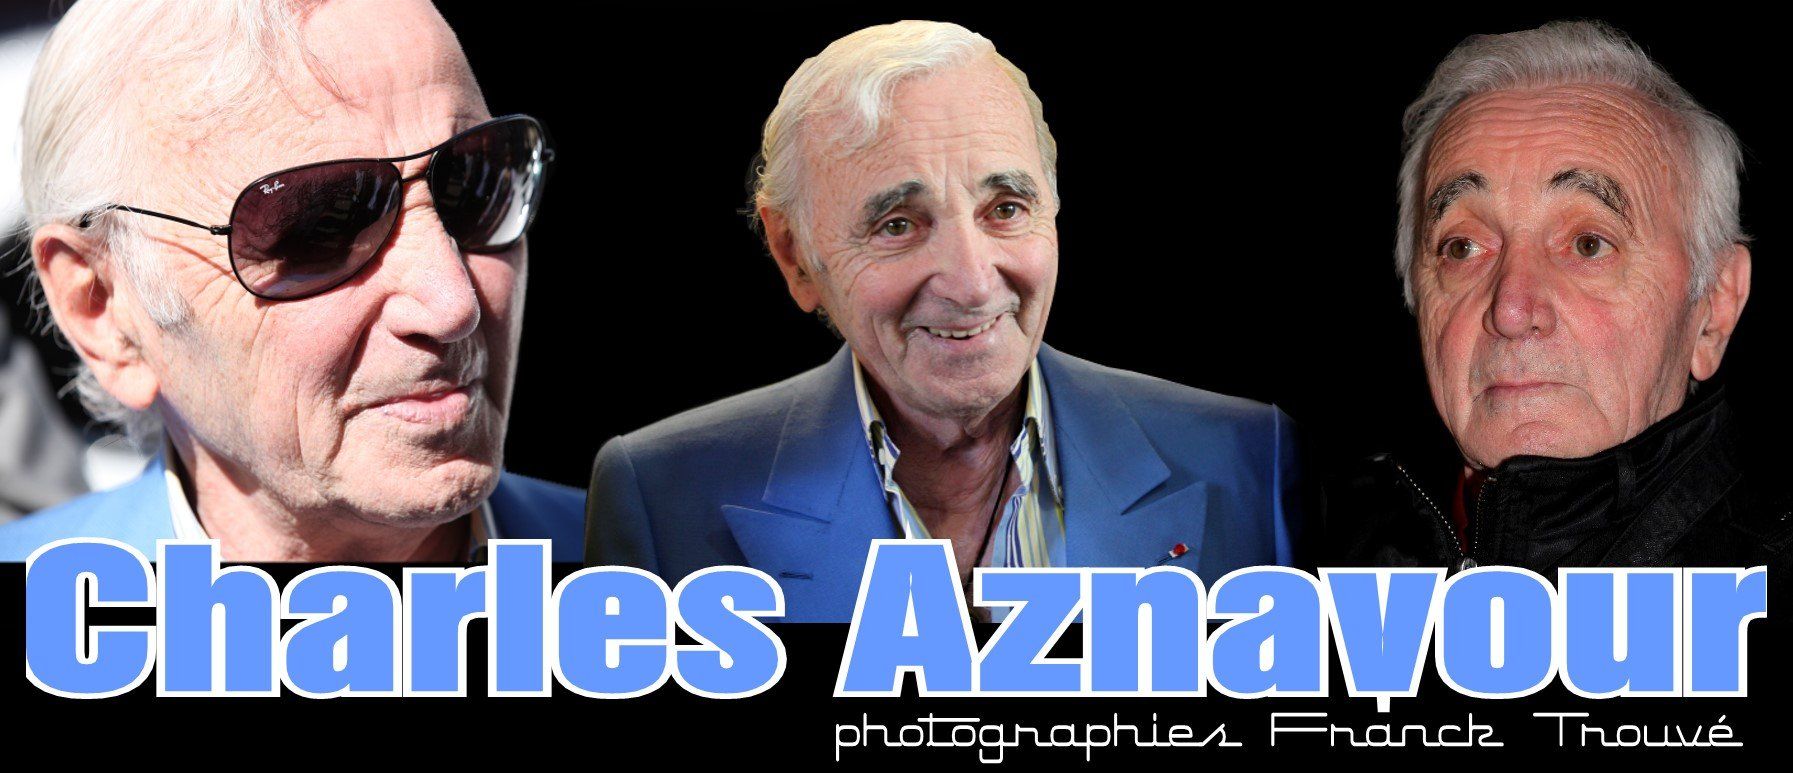 charles aznavour photographe franck trouvé